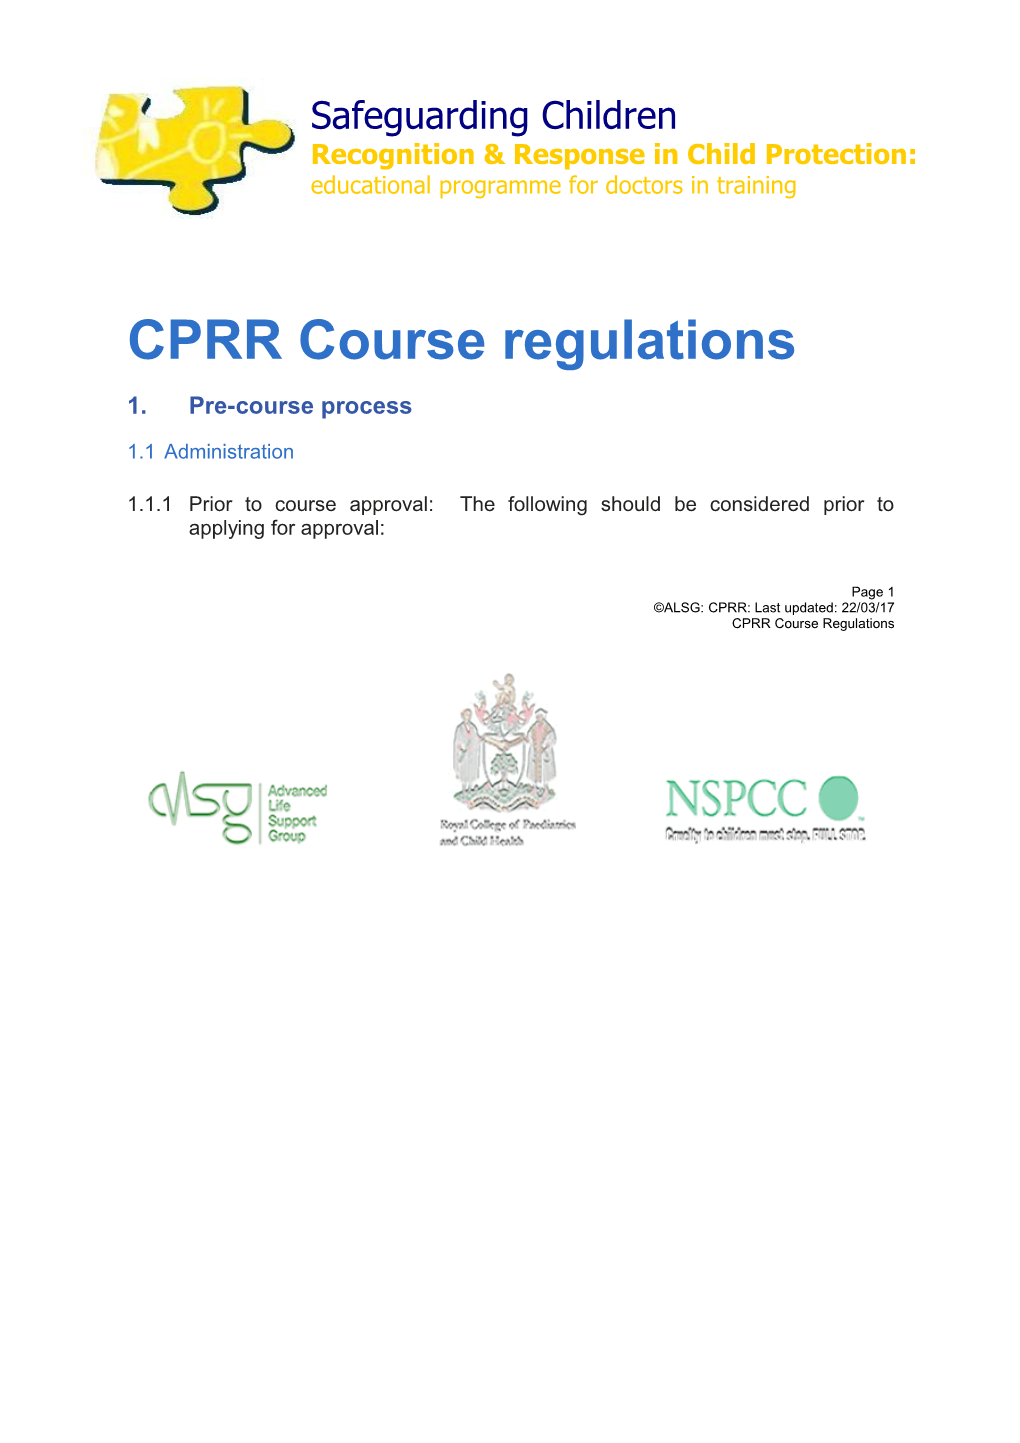 CPRR Course Regulations